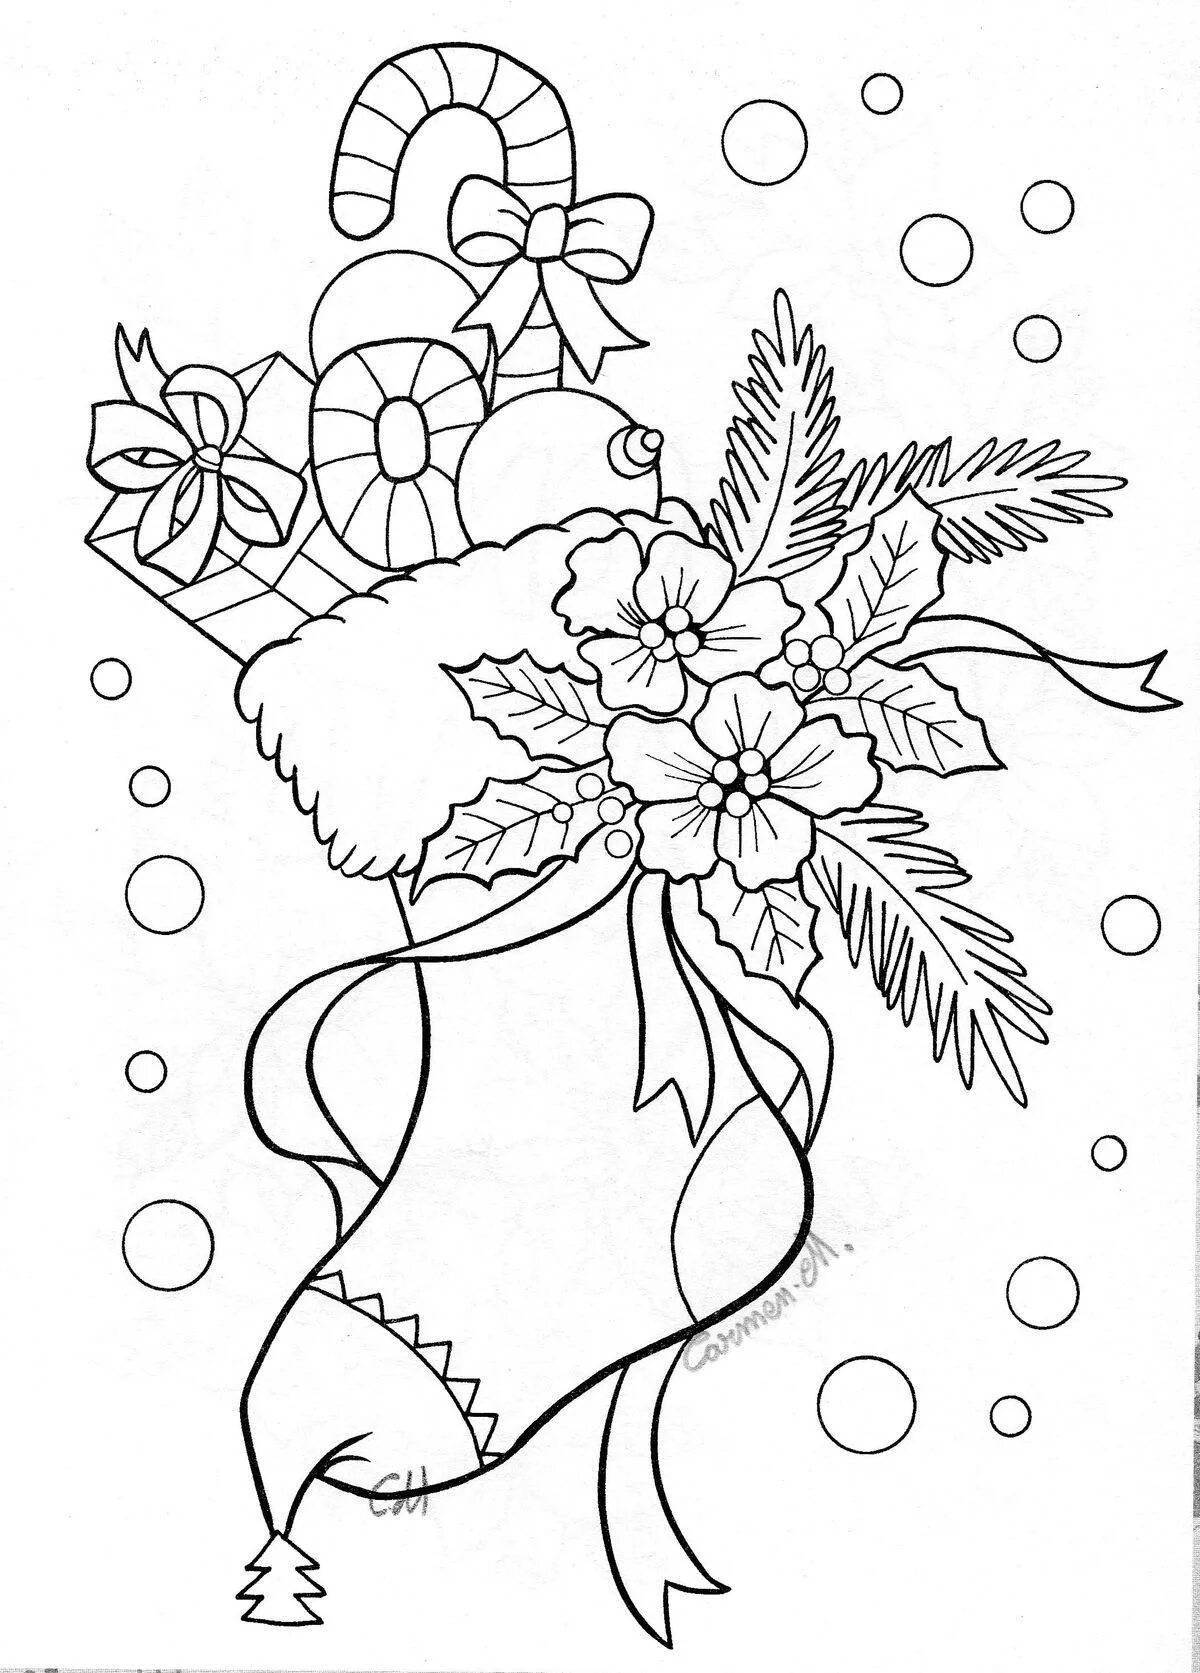 Coloring bright winter bouquet